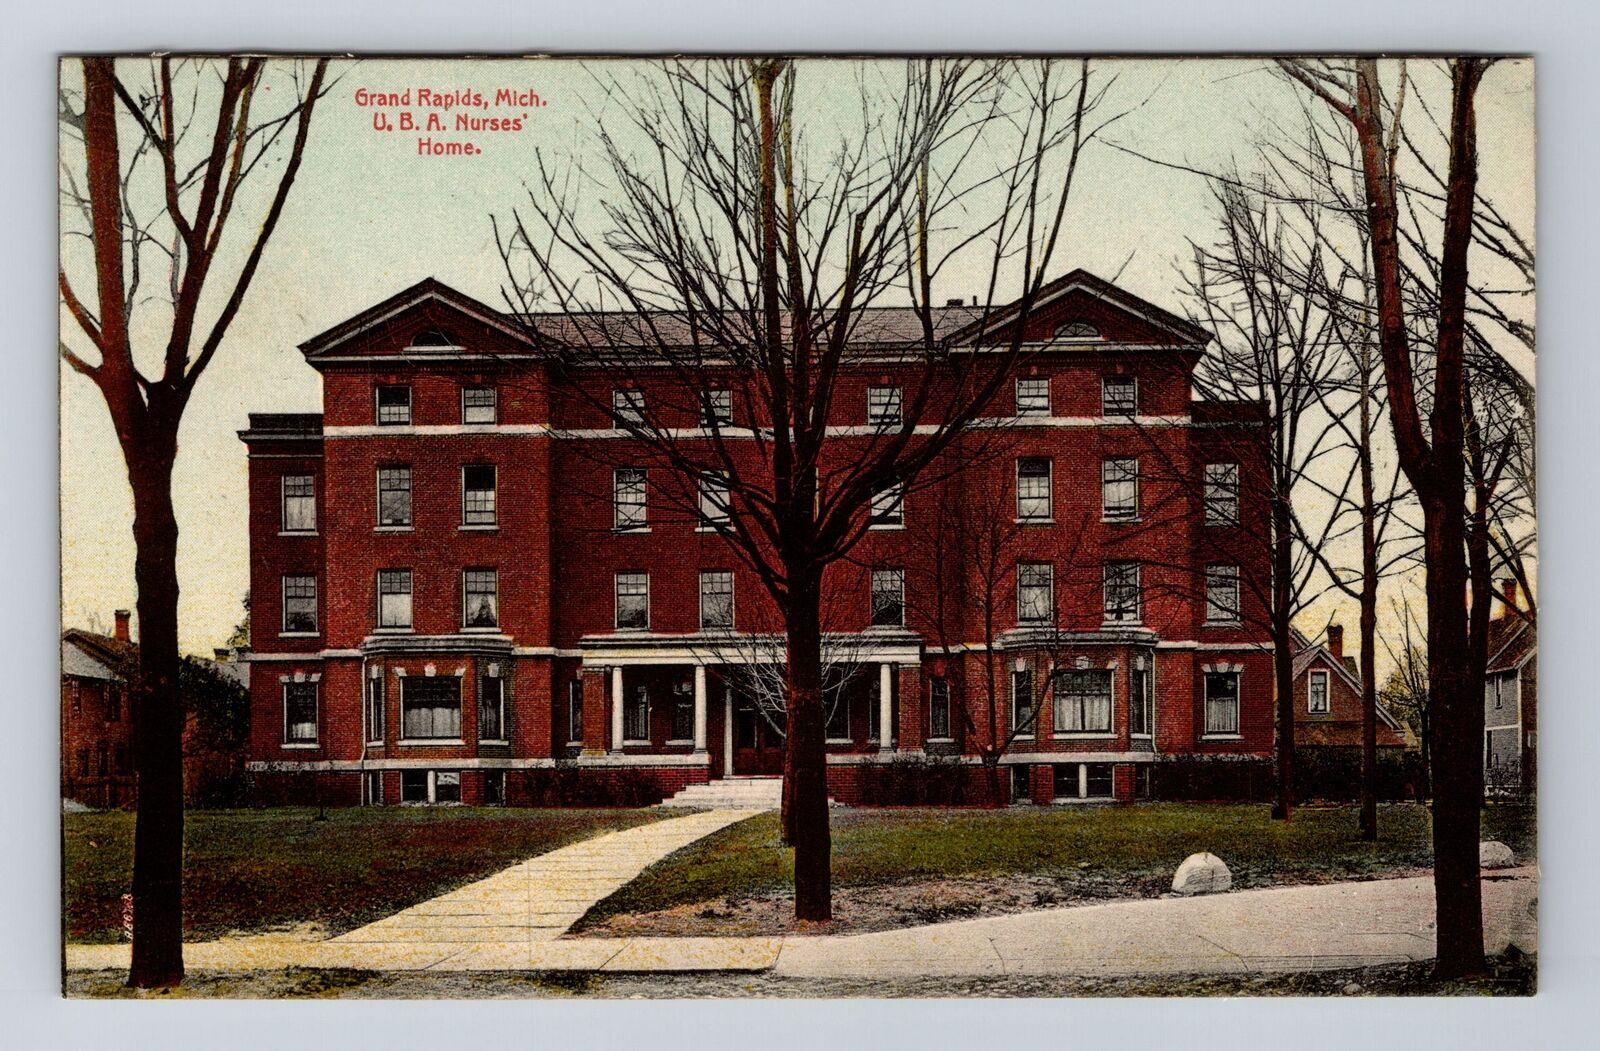 Grand Rapids MI-Michigan, U.B.A Nurses\' Home, Antique Vintage Souvenir Postcard